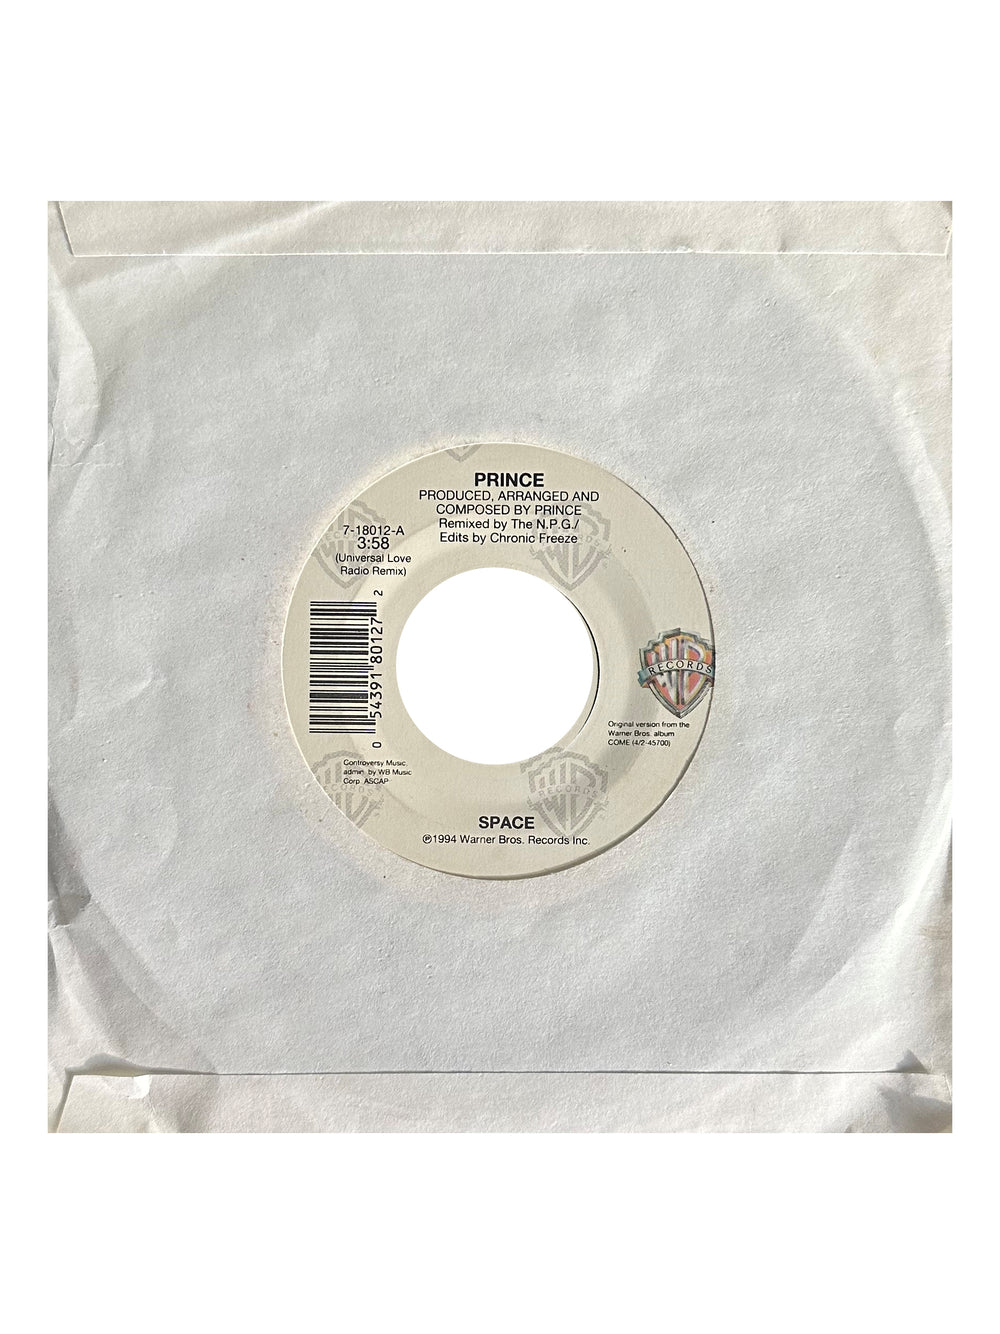 Prince ‎– Space (Universal Love Radio Remix) Vinyl 7" Single US Preloved:1994